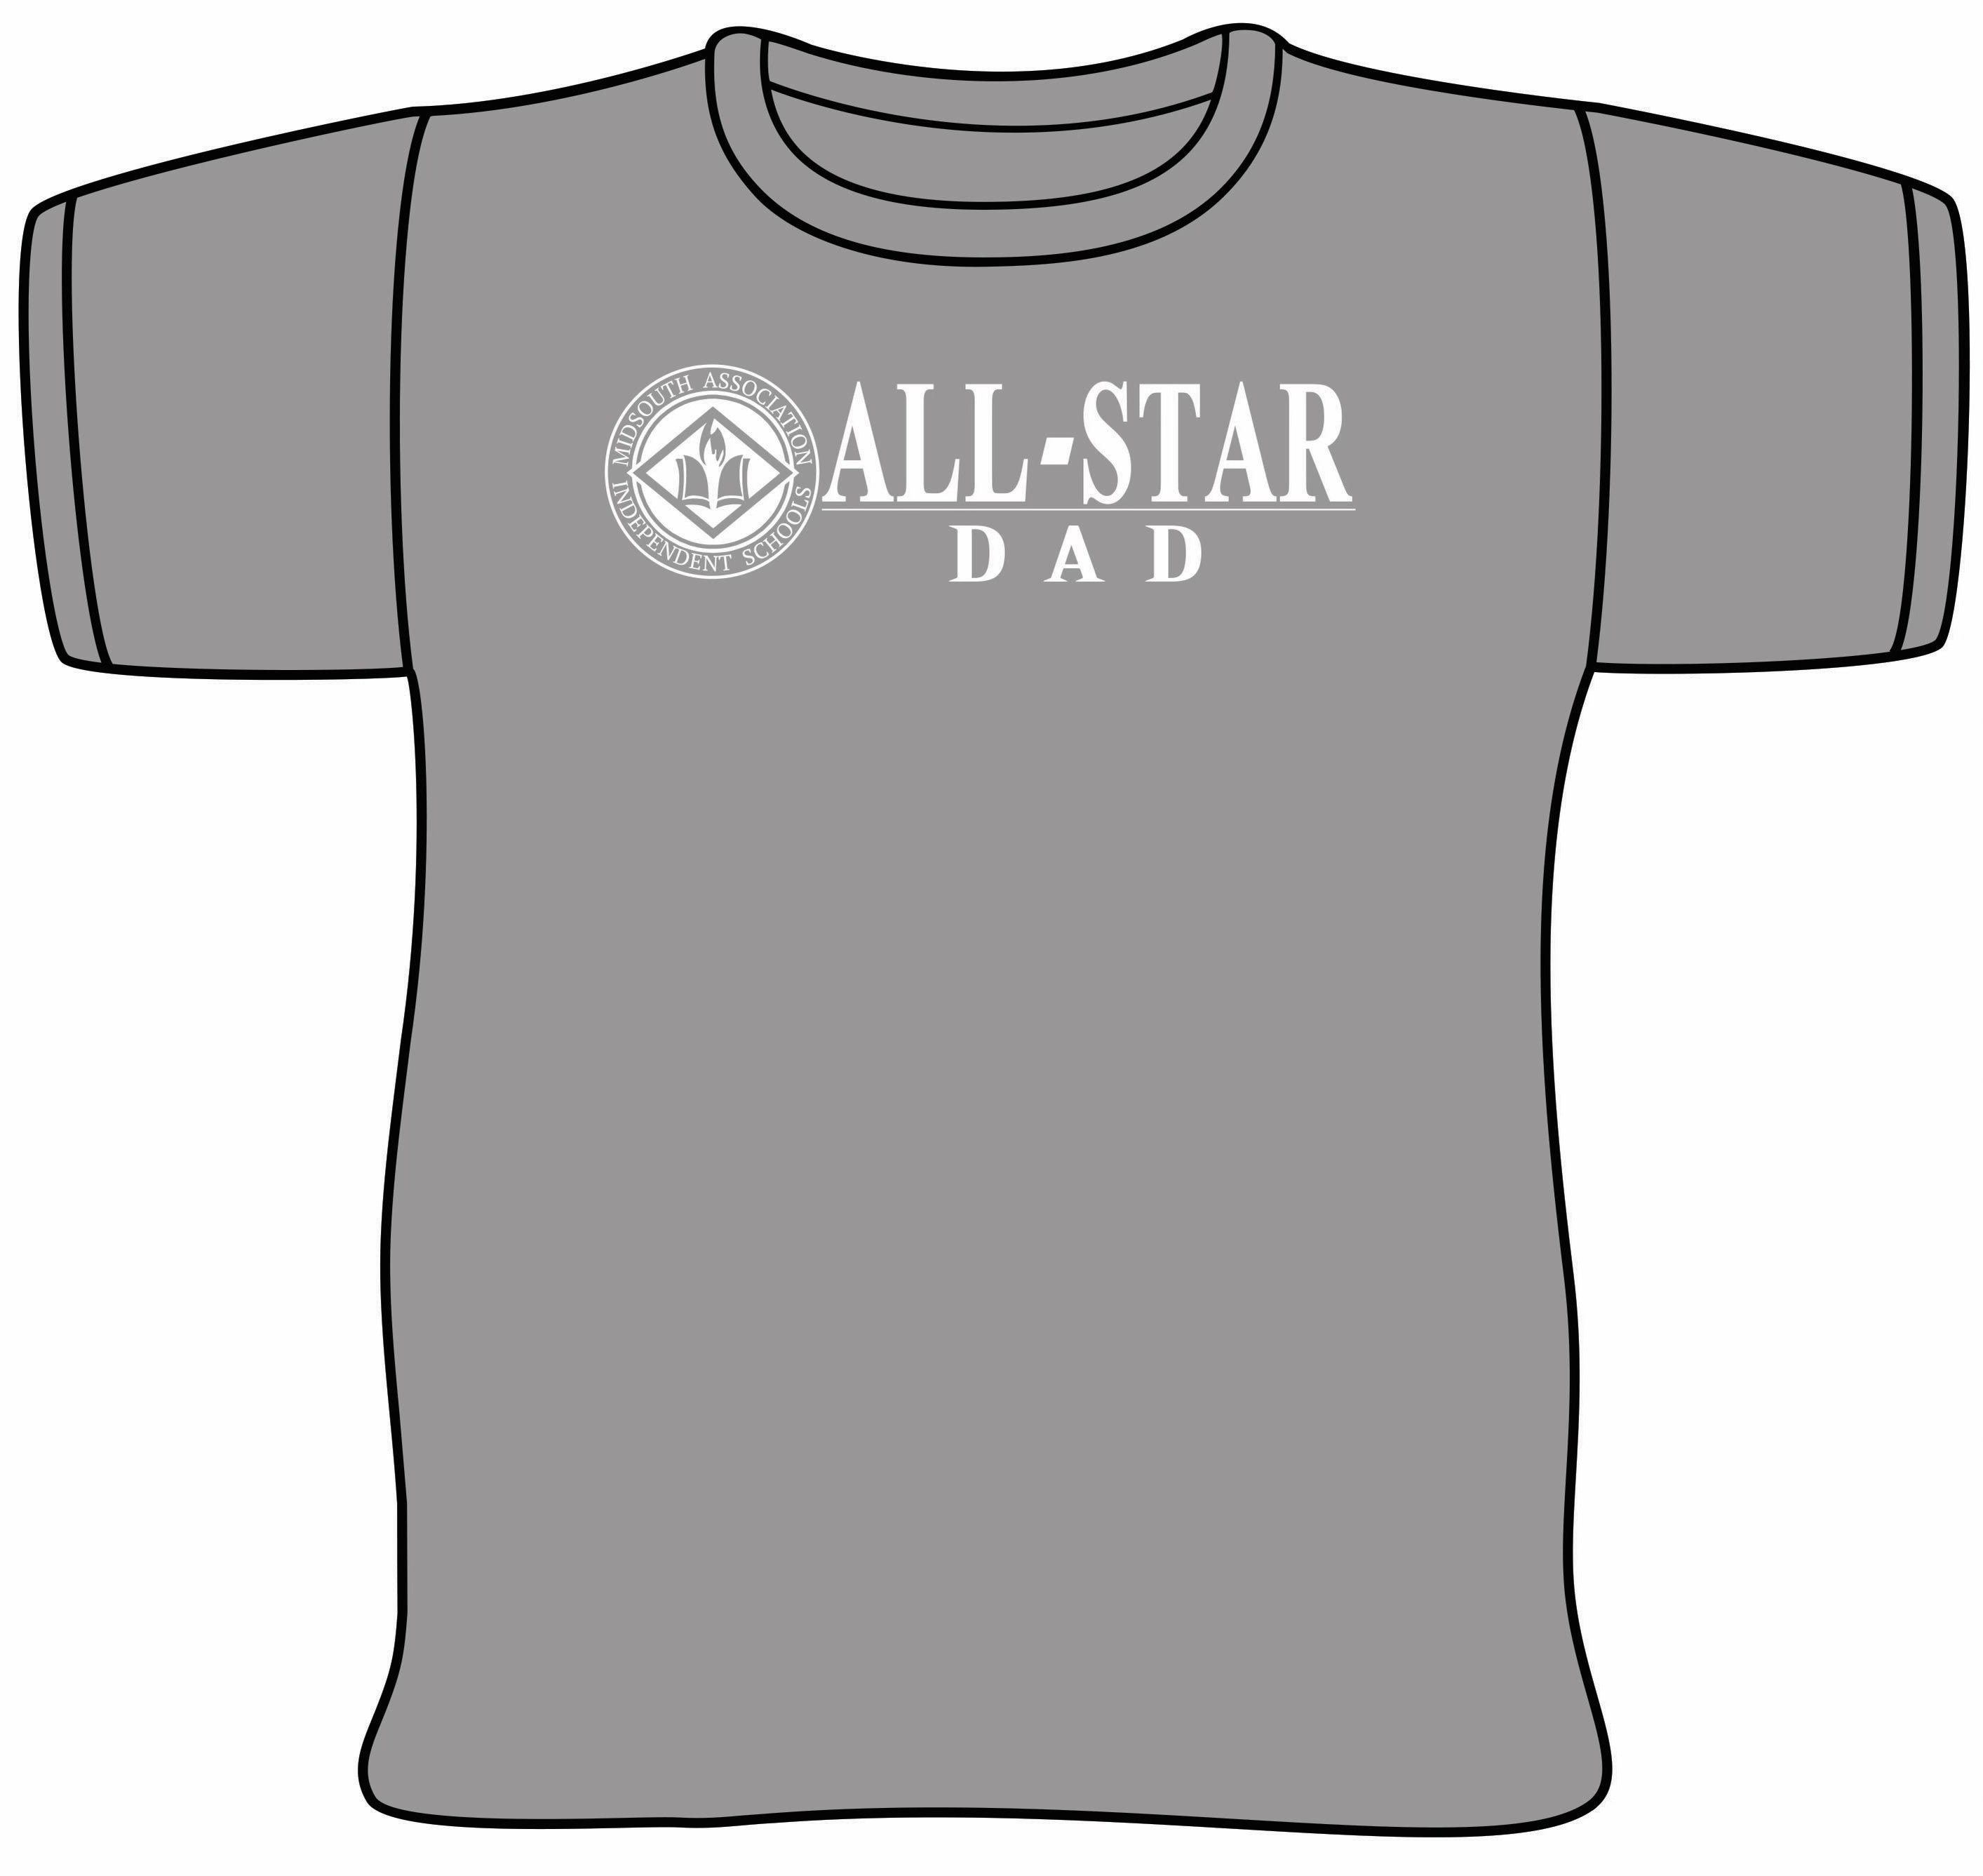 All Star Dad Shirt 